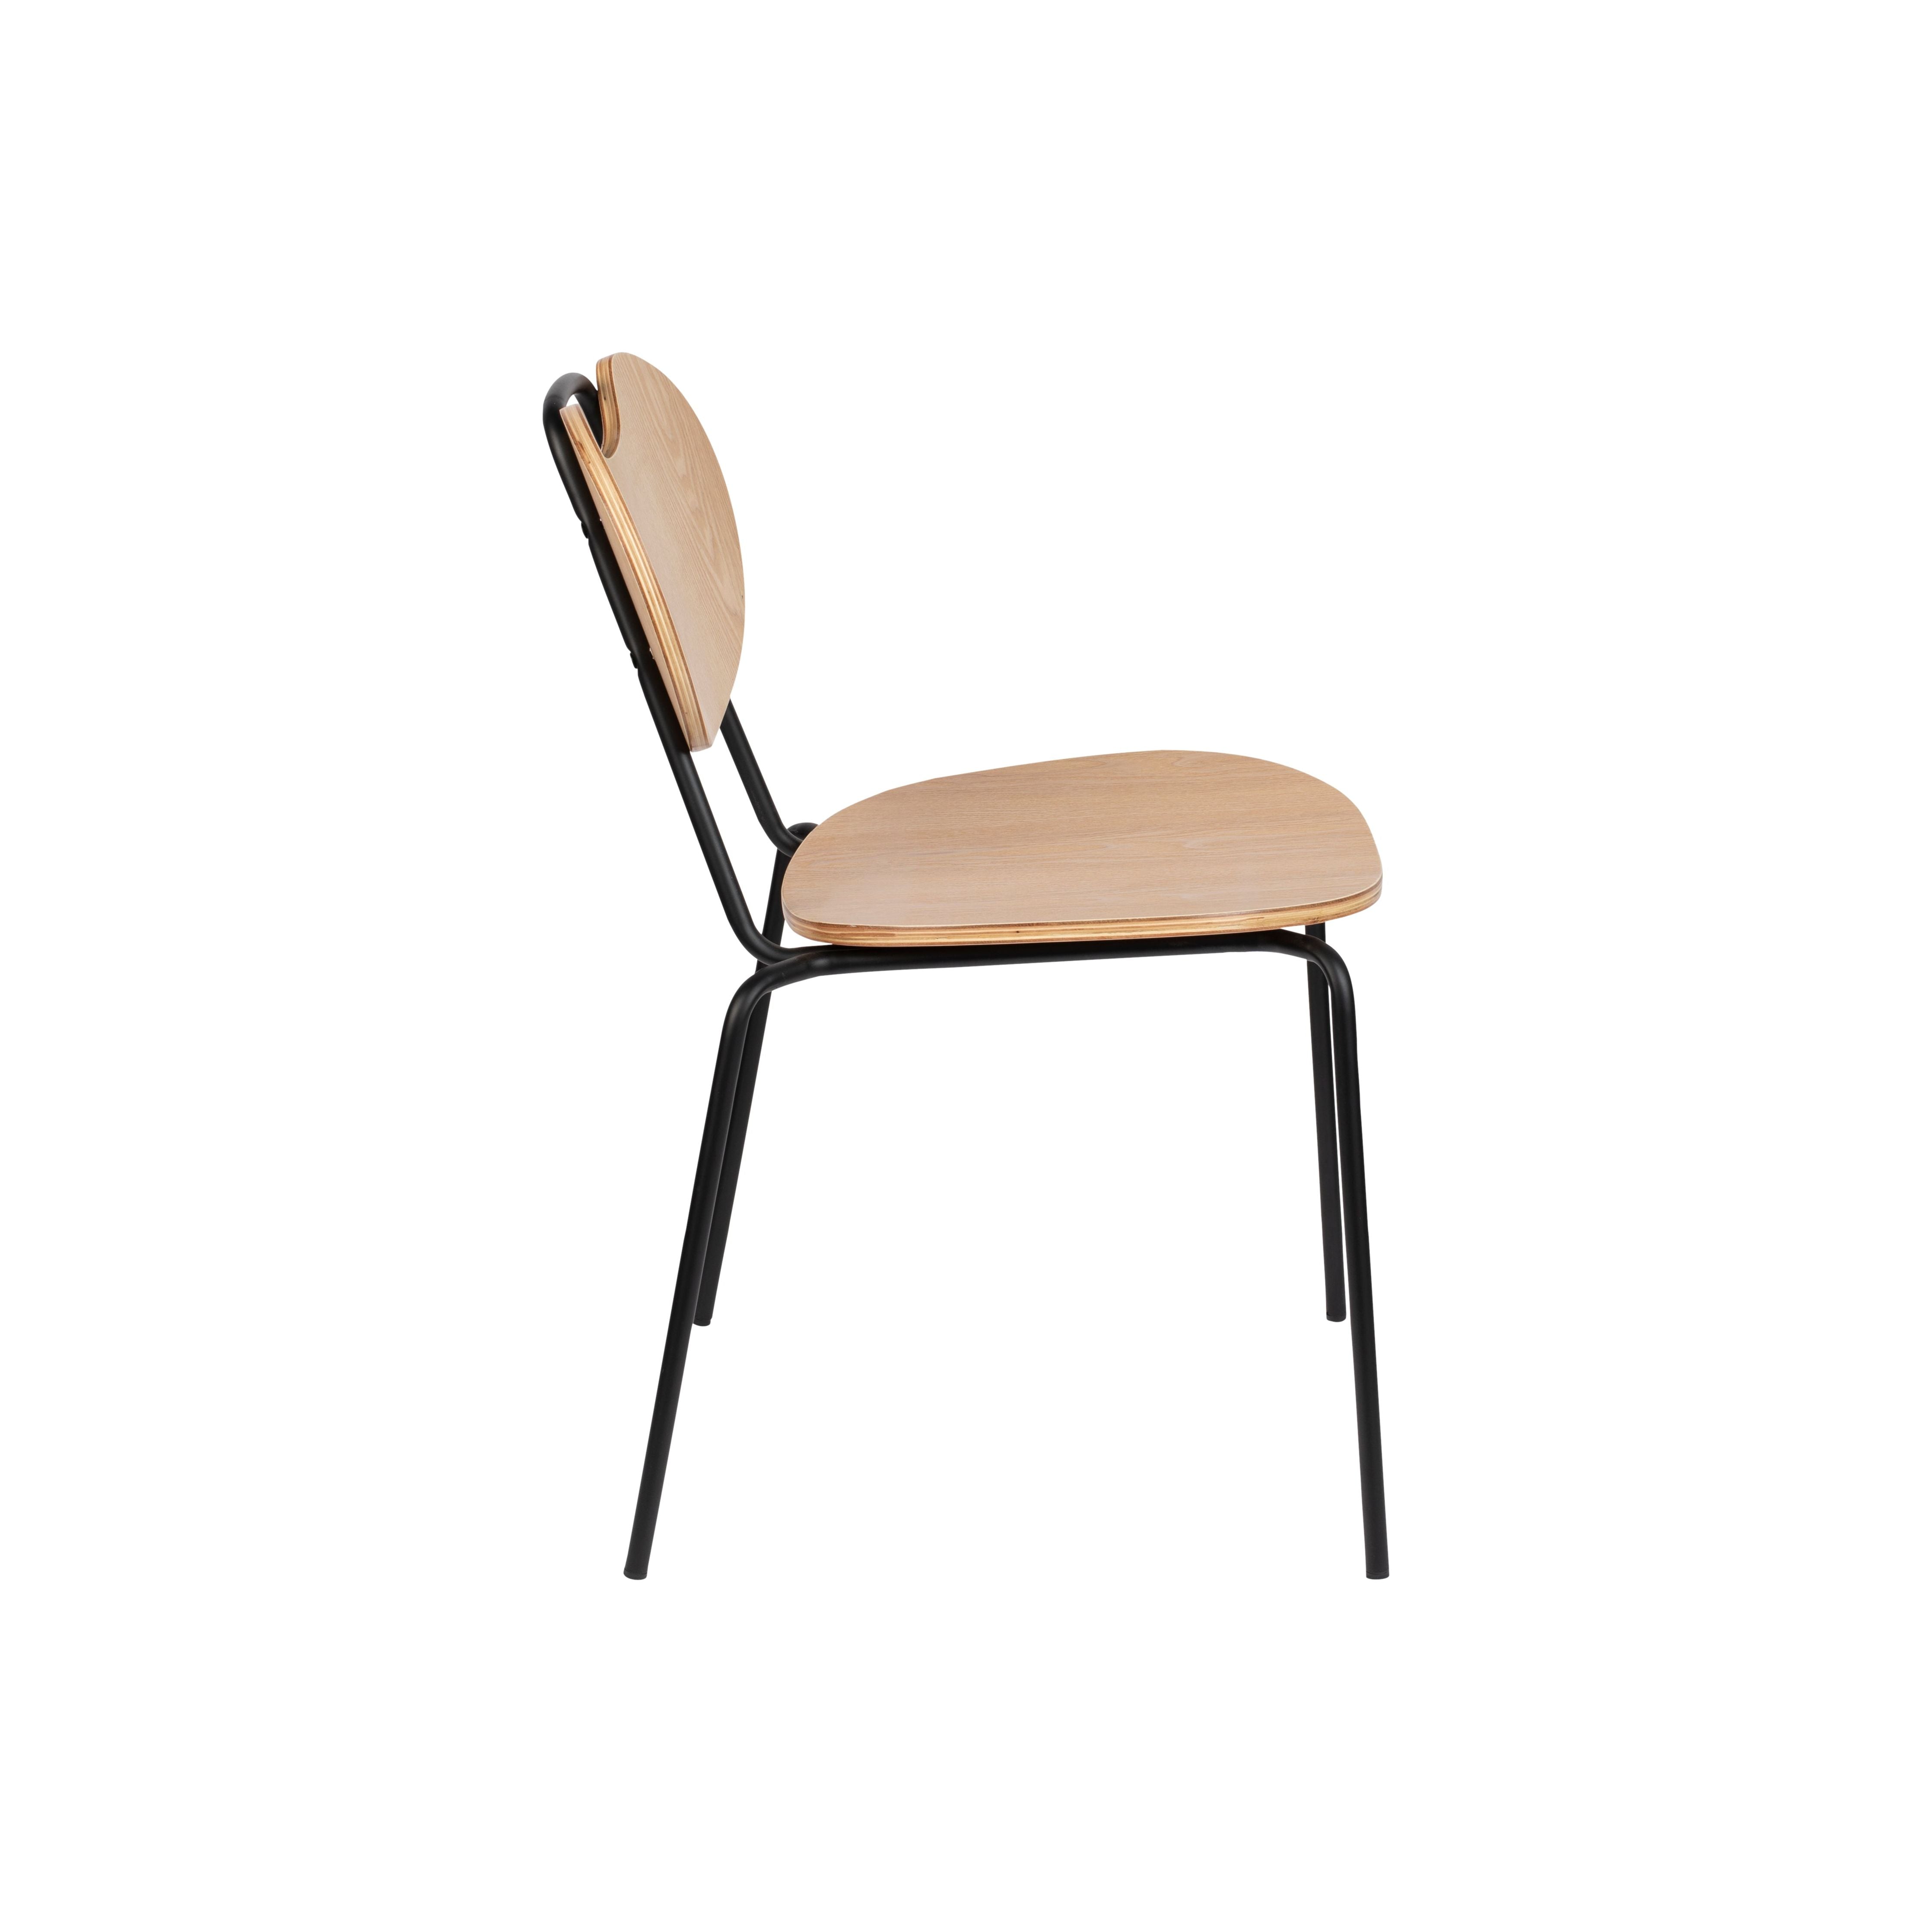 Chair aspen wood natural | 2 pieces